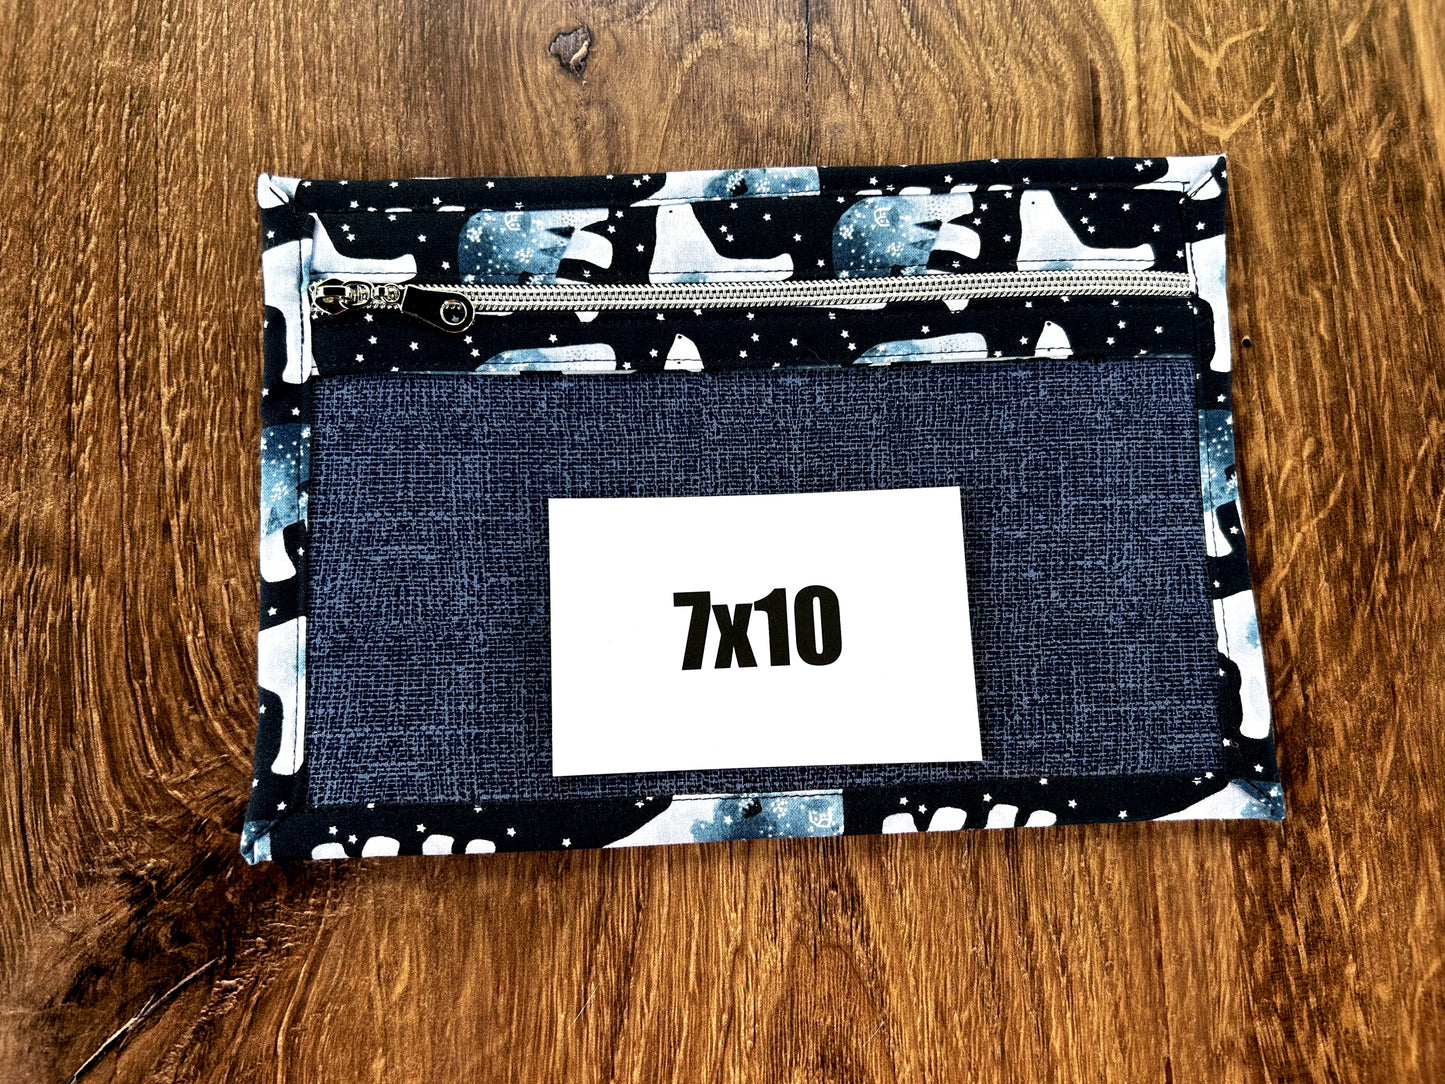 Vinyl Cross Stitch Project Bag - Embroidery bag - Project Bag - Knitting & Crochet Bag - Storage - Organizer - Notions - Polar Bear